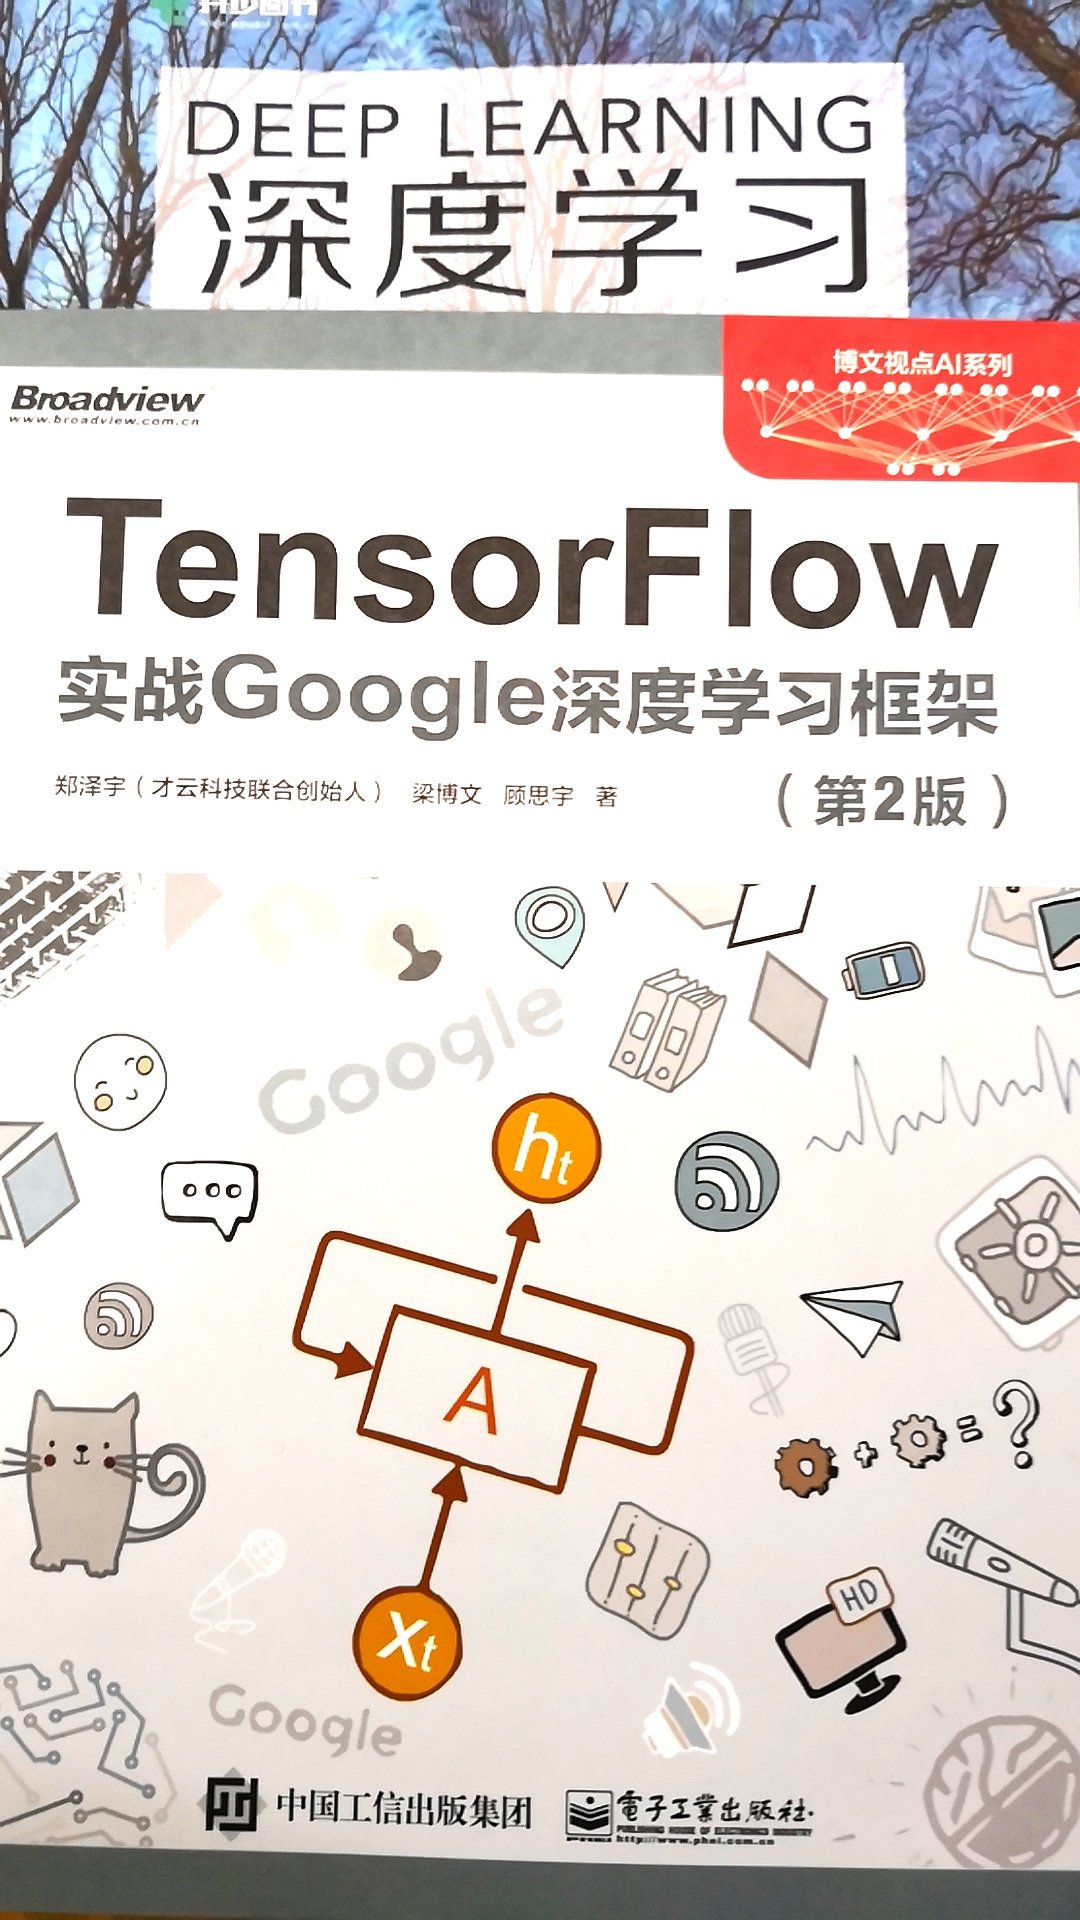 TensorFlow也算是比较好的了，这本书很适合入门，一些基本的算法也都实现了，很好!???